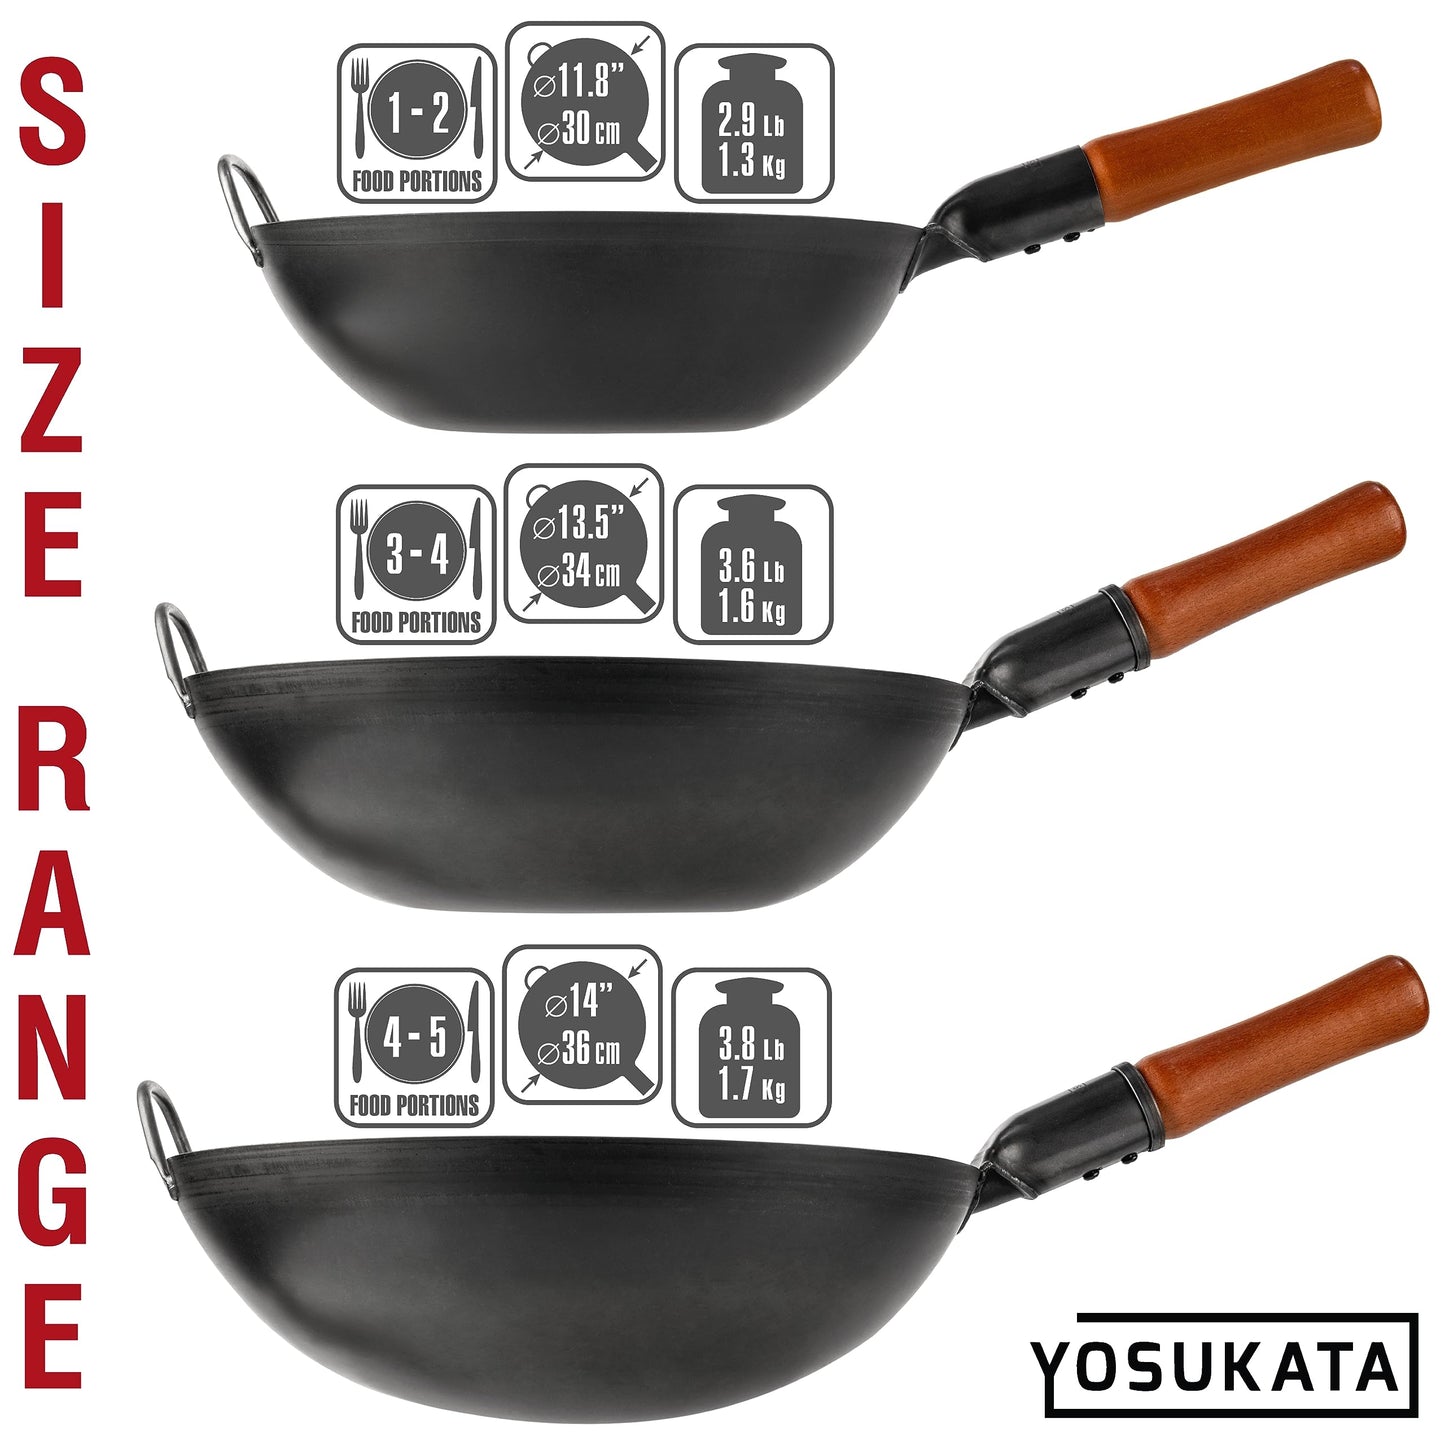 YOSUKATA Carbon Steel Wok Pan – 13,5 “ Stir Fry Pans - Chinese Wok with Flat Bottom Pow Wok - Traditional Japanese Woks - Black Carbon Steel